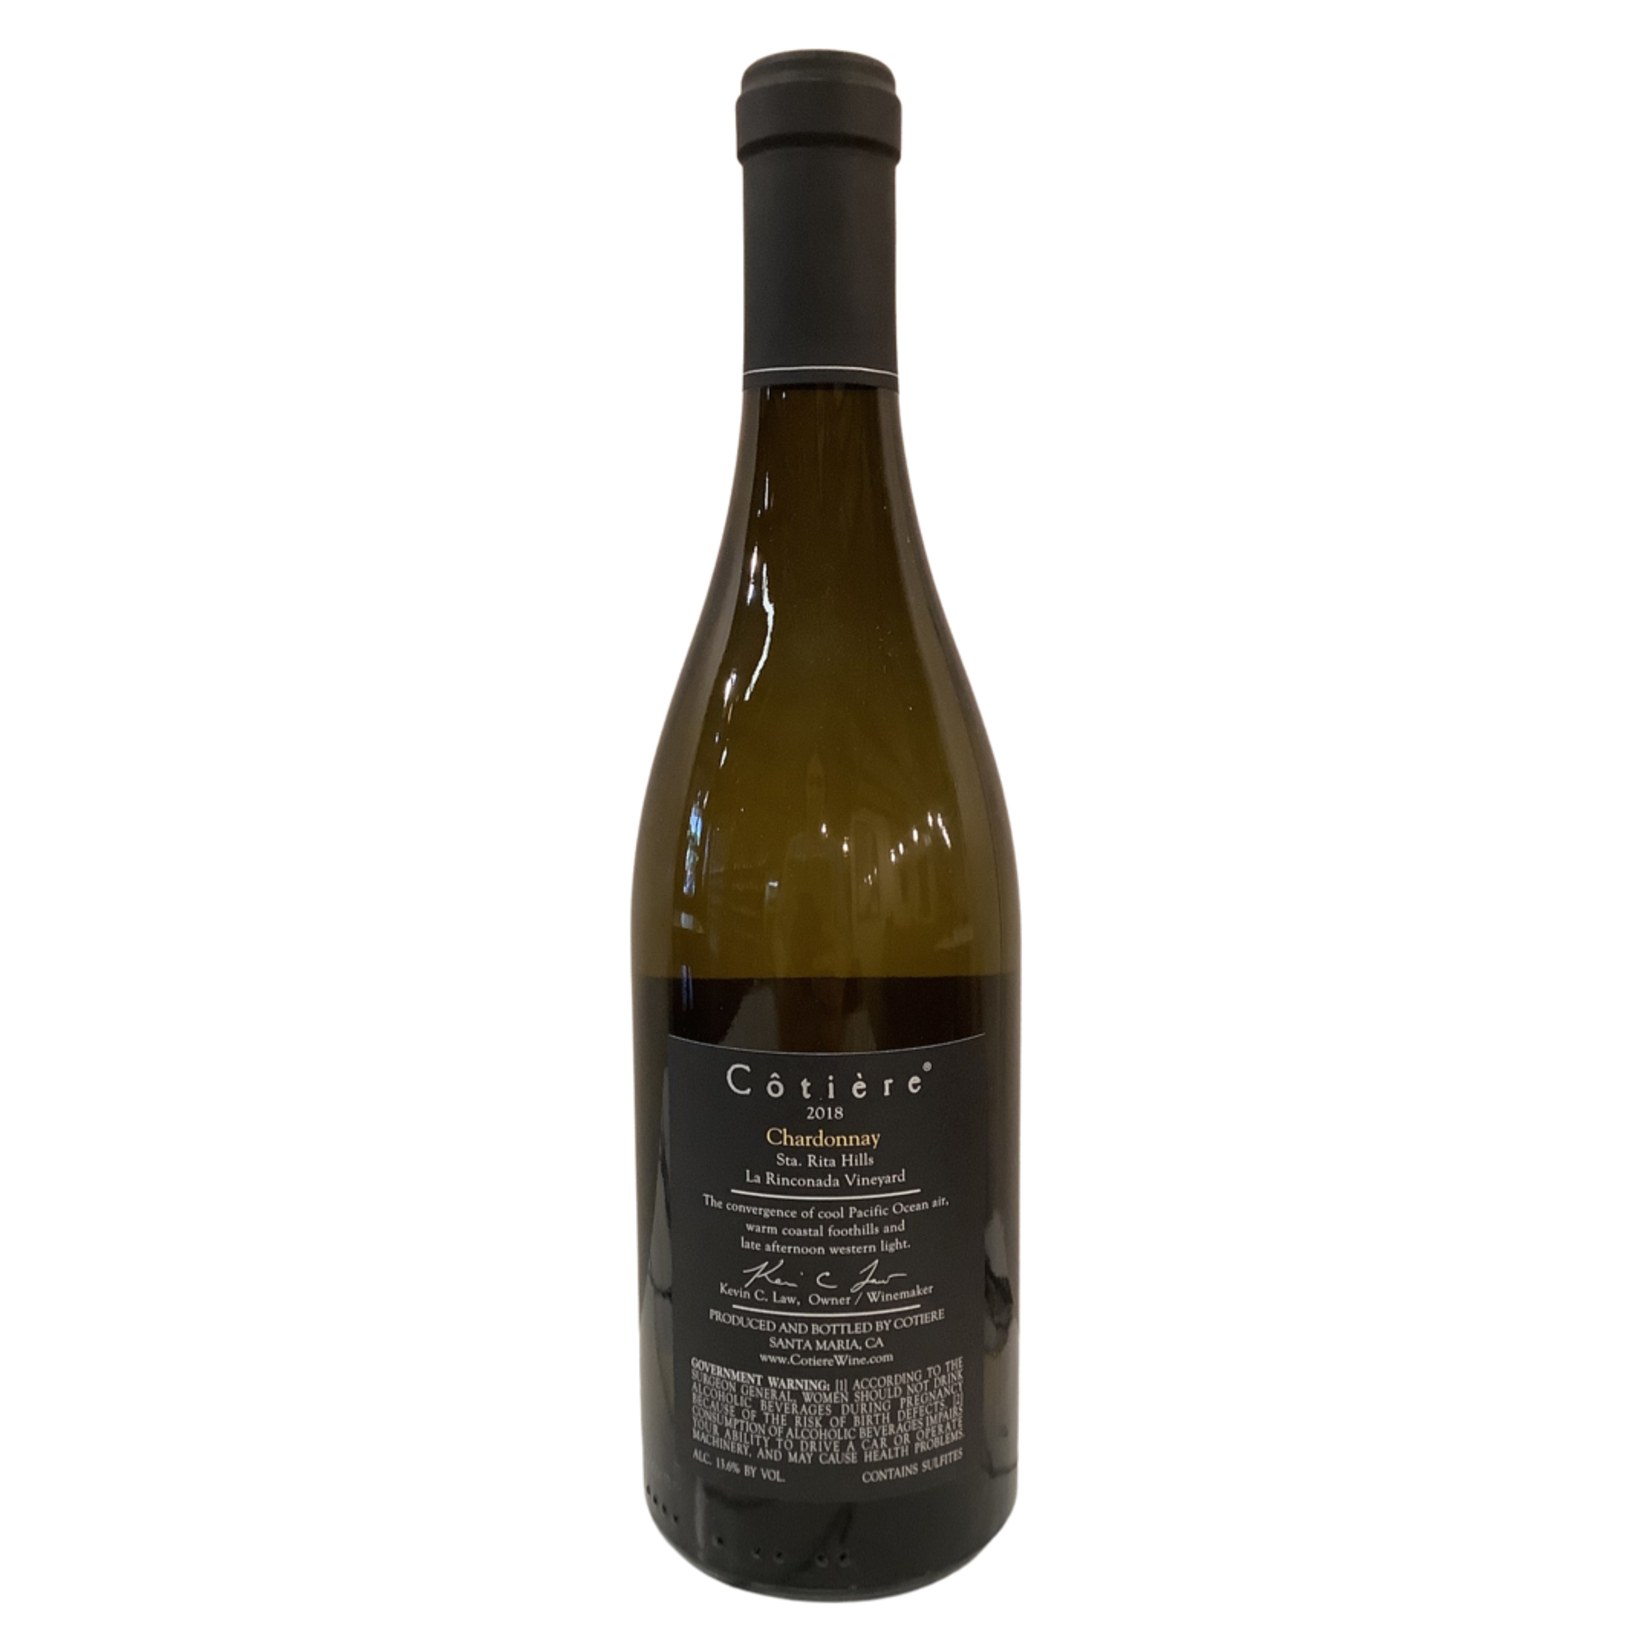 2018 Côtière "La Rinconada Vineyard" Chardonnay, Sta. Rita Hills CA